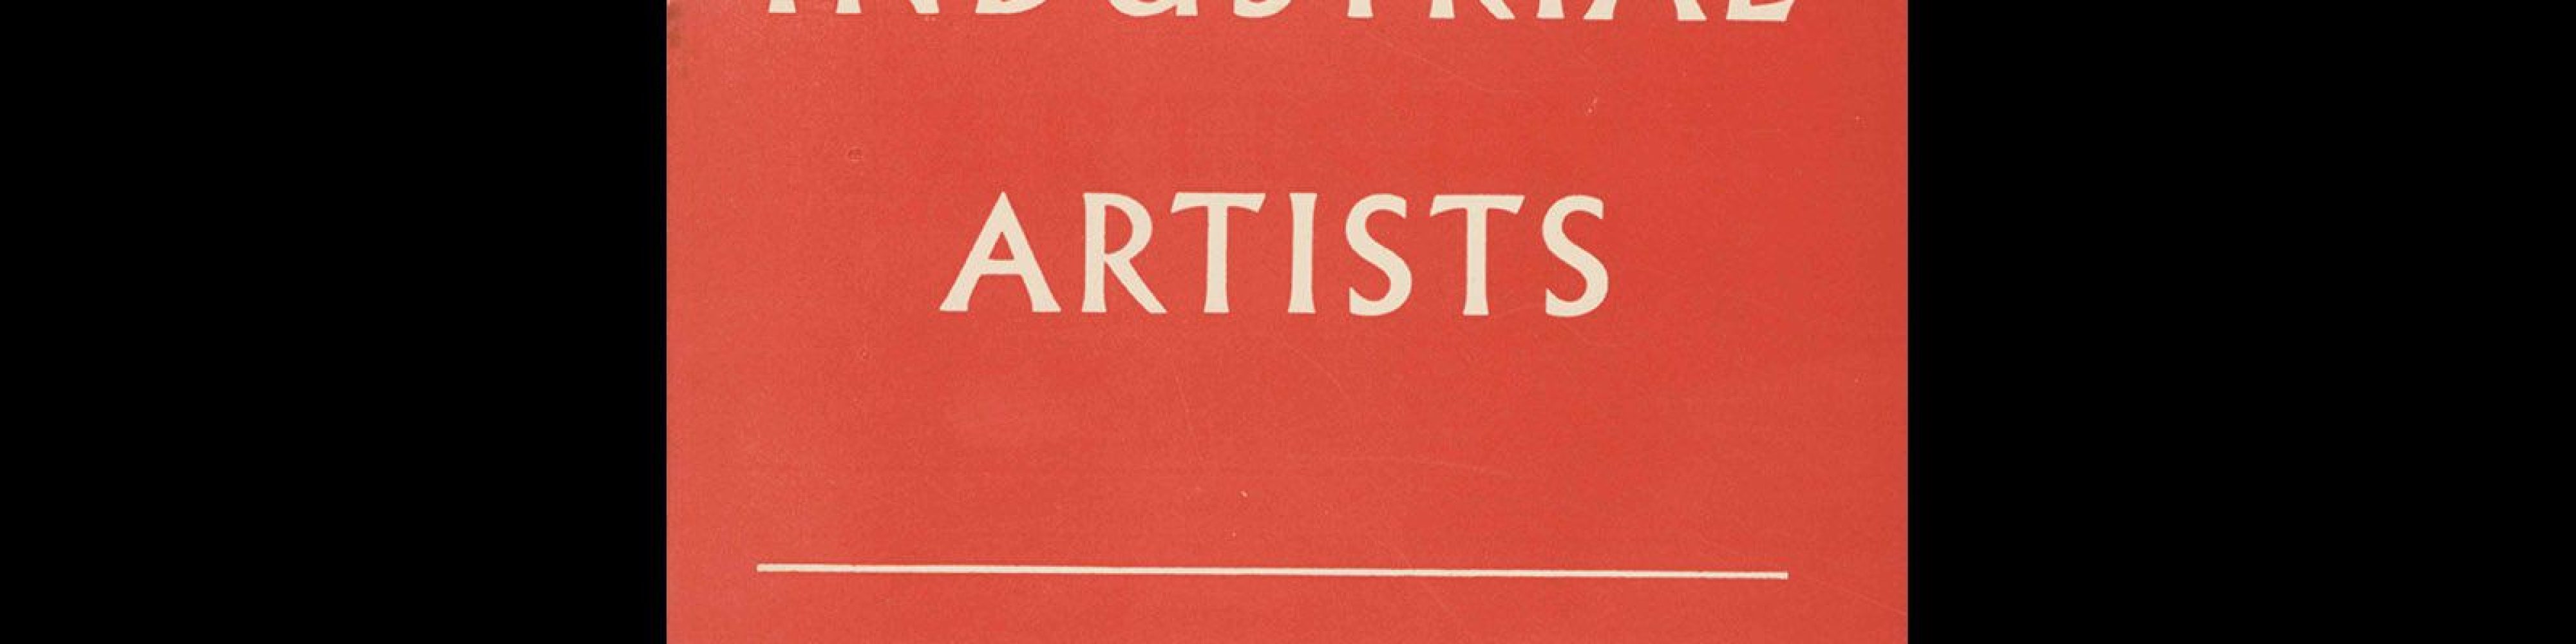 Society of Industrial Artists, 30, December 1952